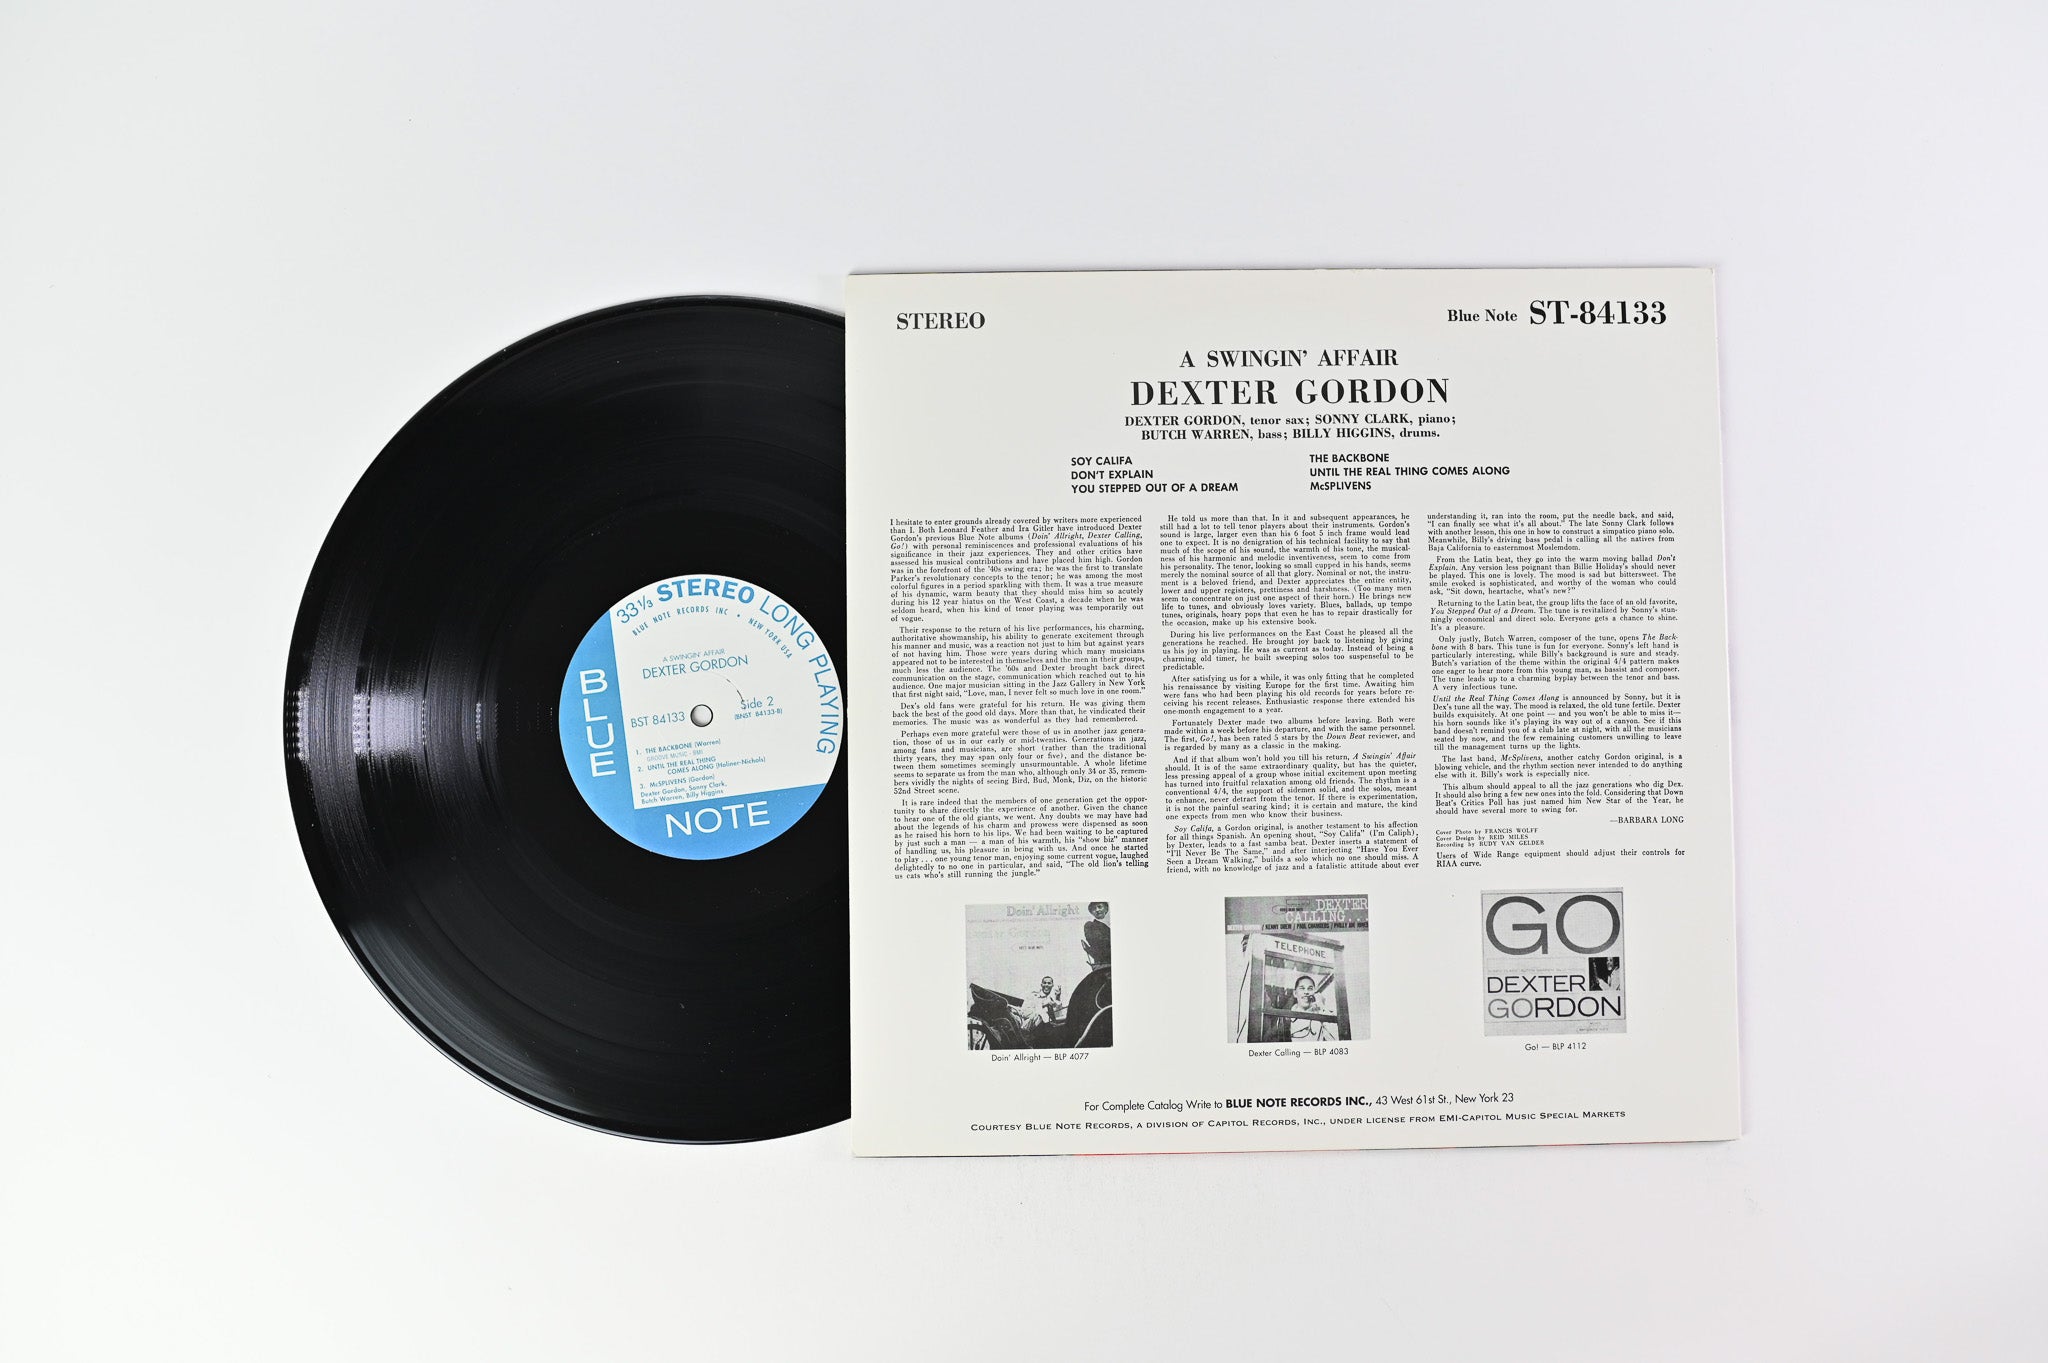 Dexter Gordon - A Swingin' Affair on Blue Note 180 Gram Classic Records Reissue